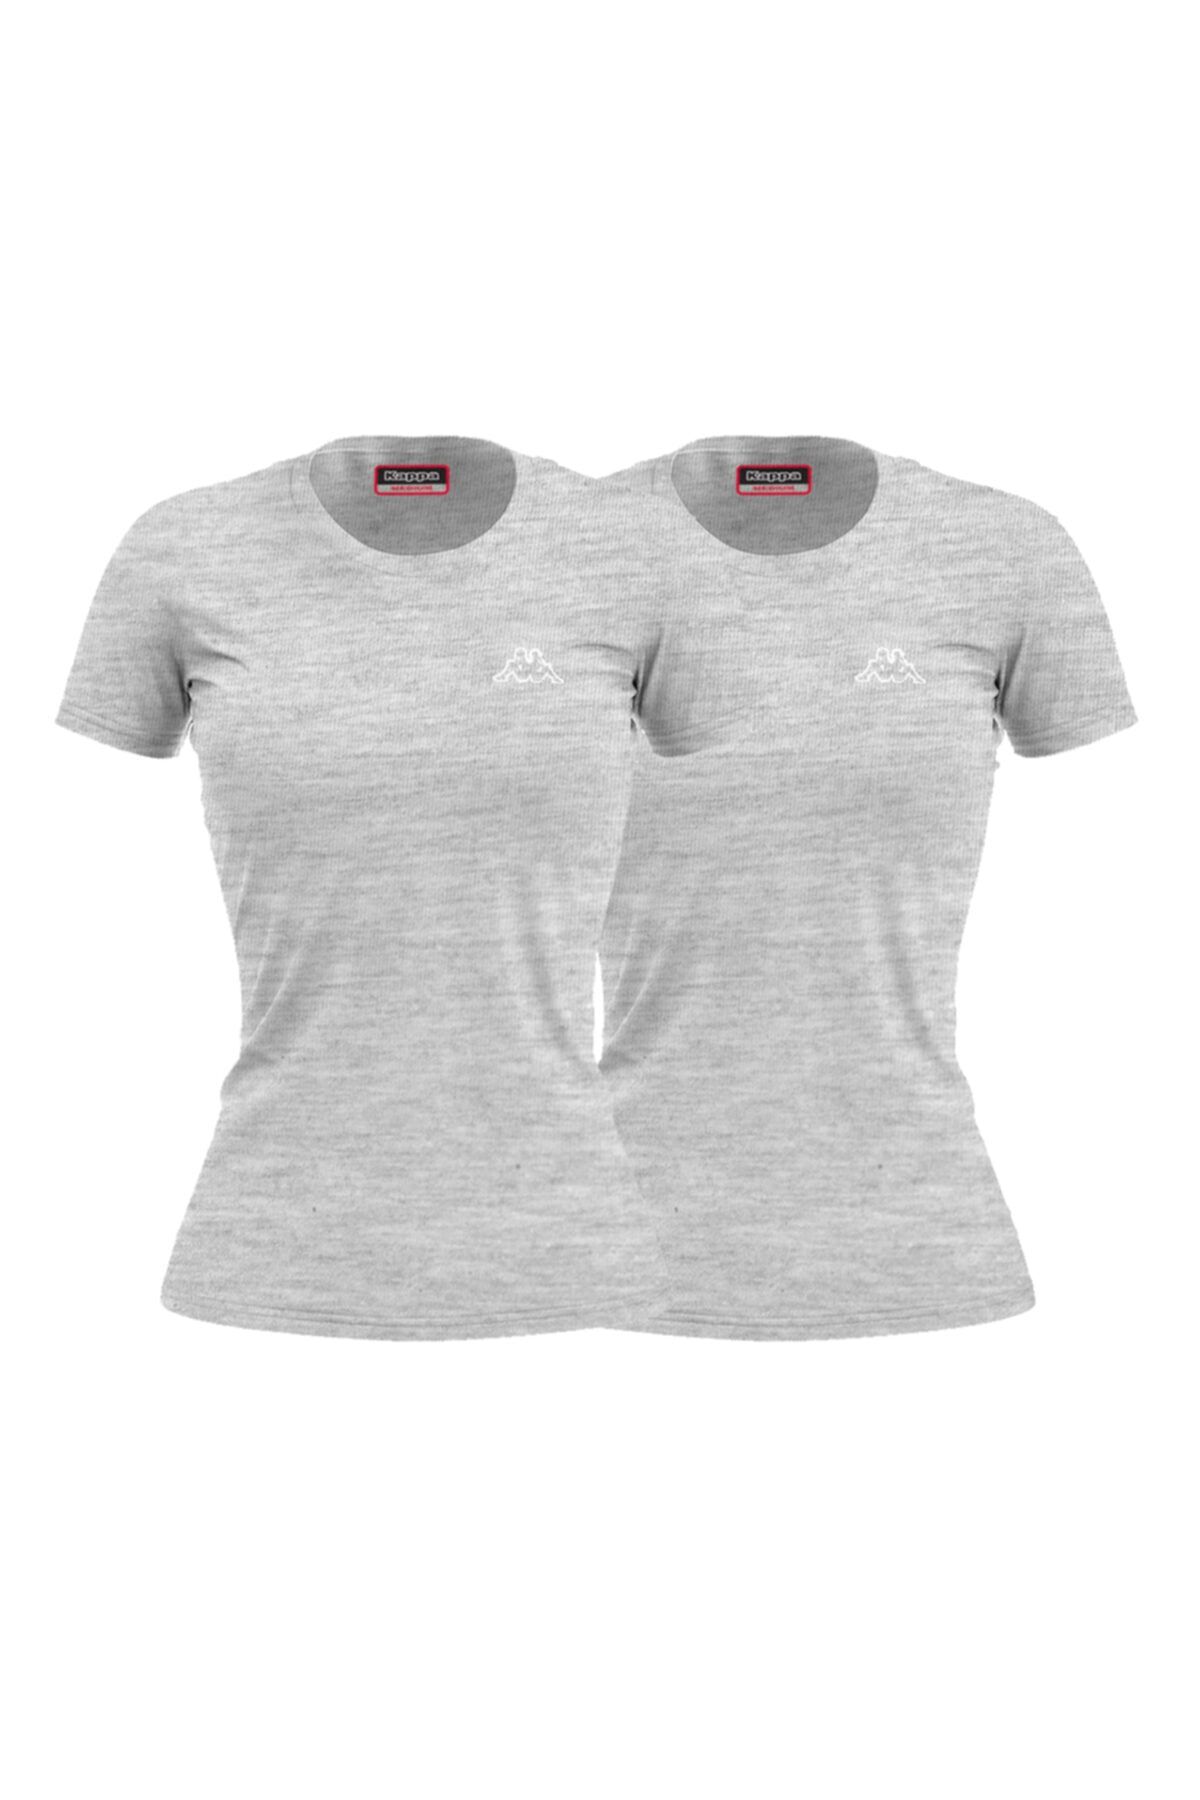 Kappa Kadın T-shirt 2 Li Paket Basıc